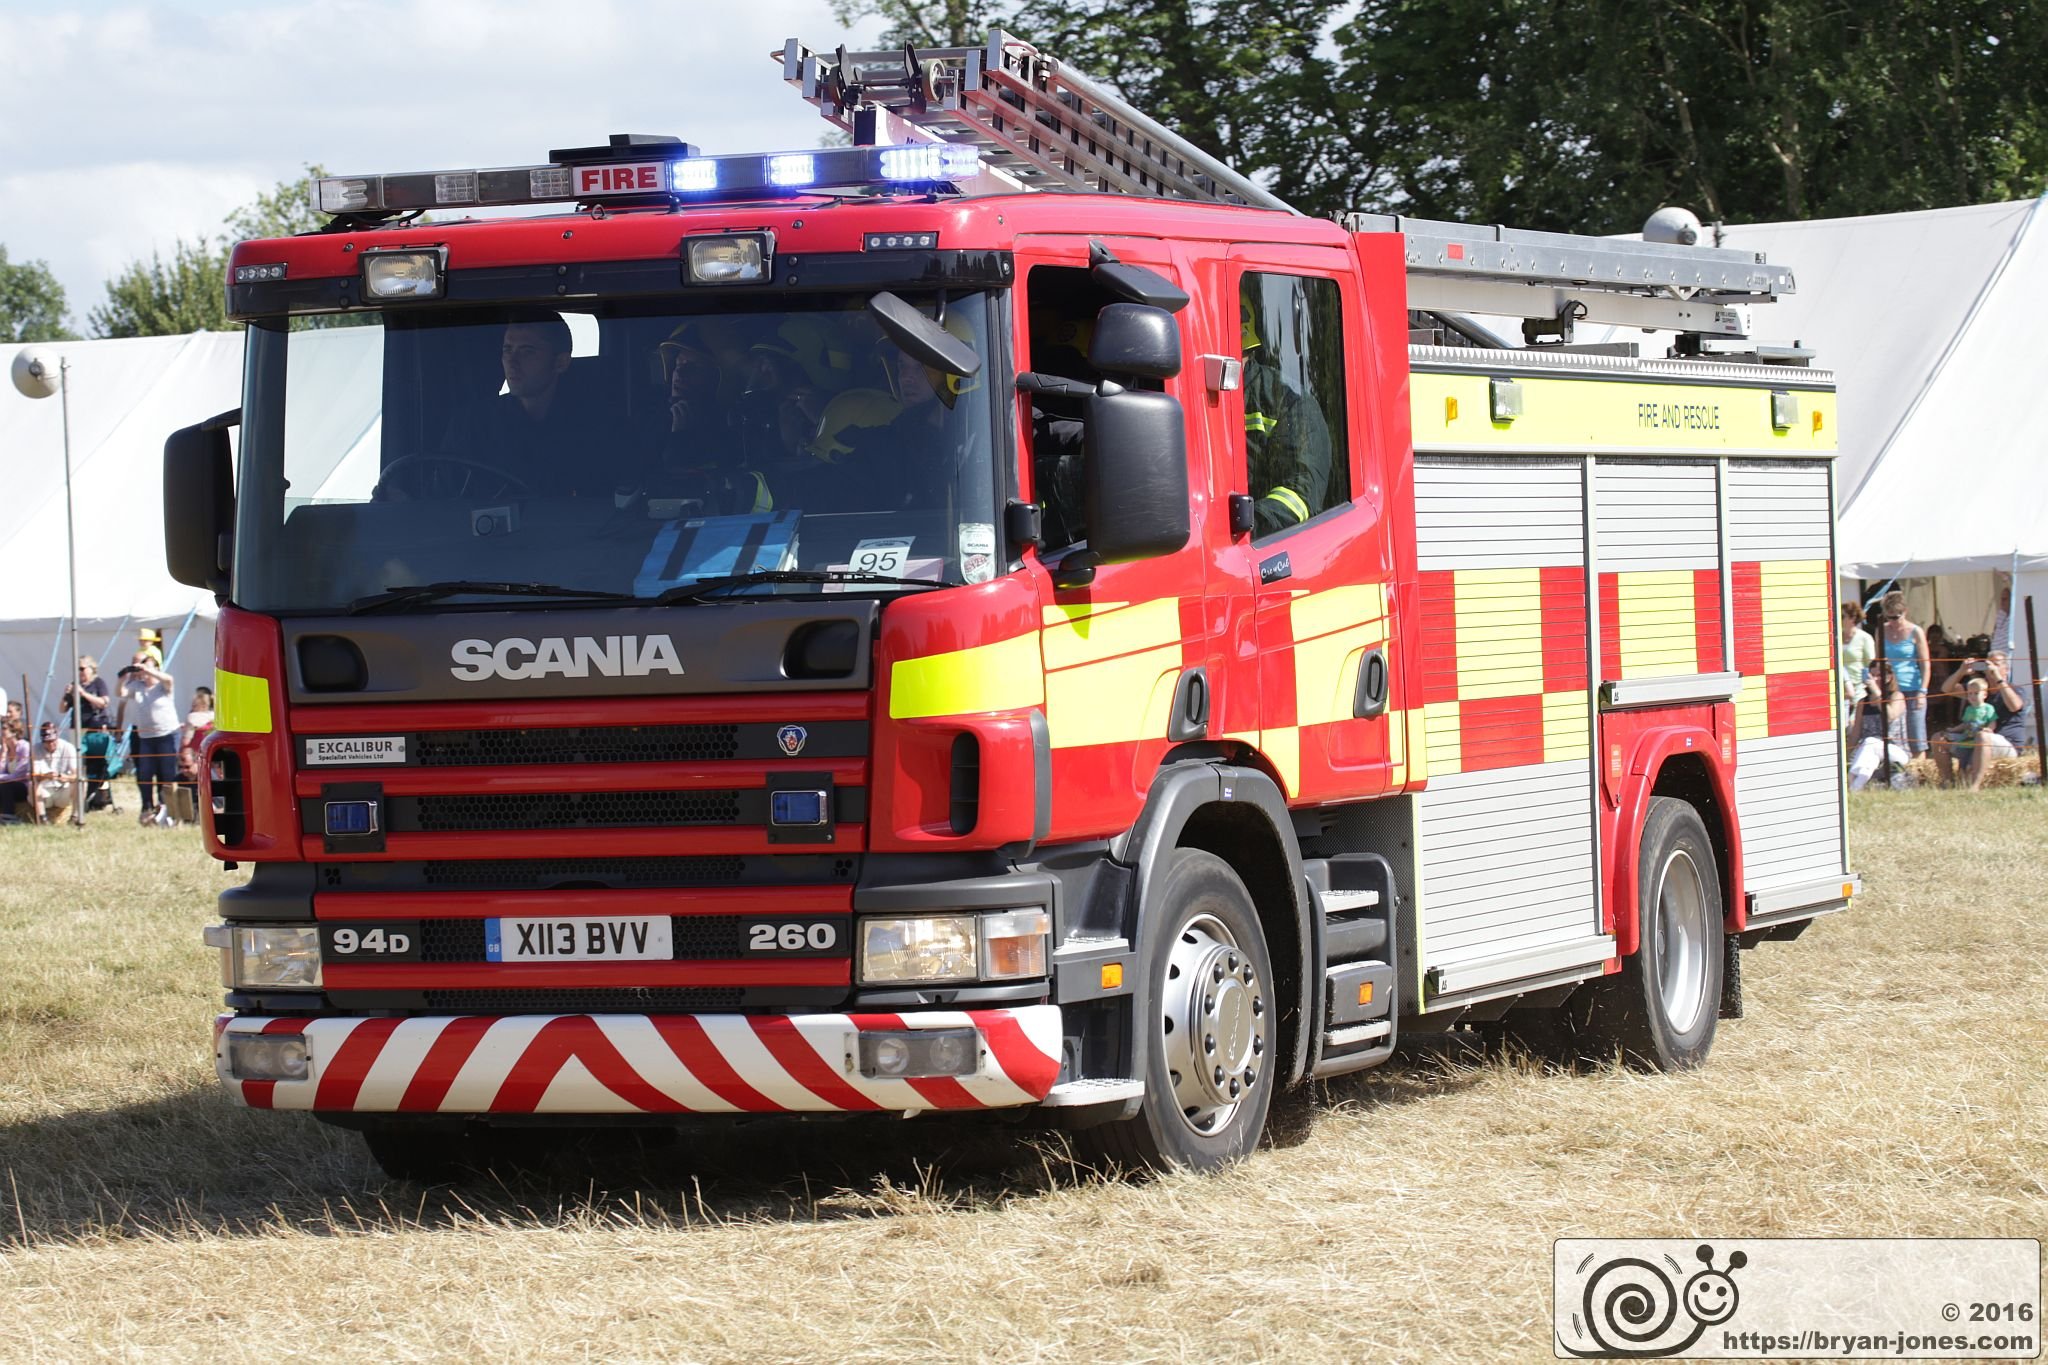 2016 Odiham Fire Show 07-Aug-2016. Scania Excalibur fire appliance. X113BVV